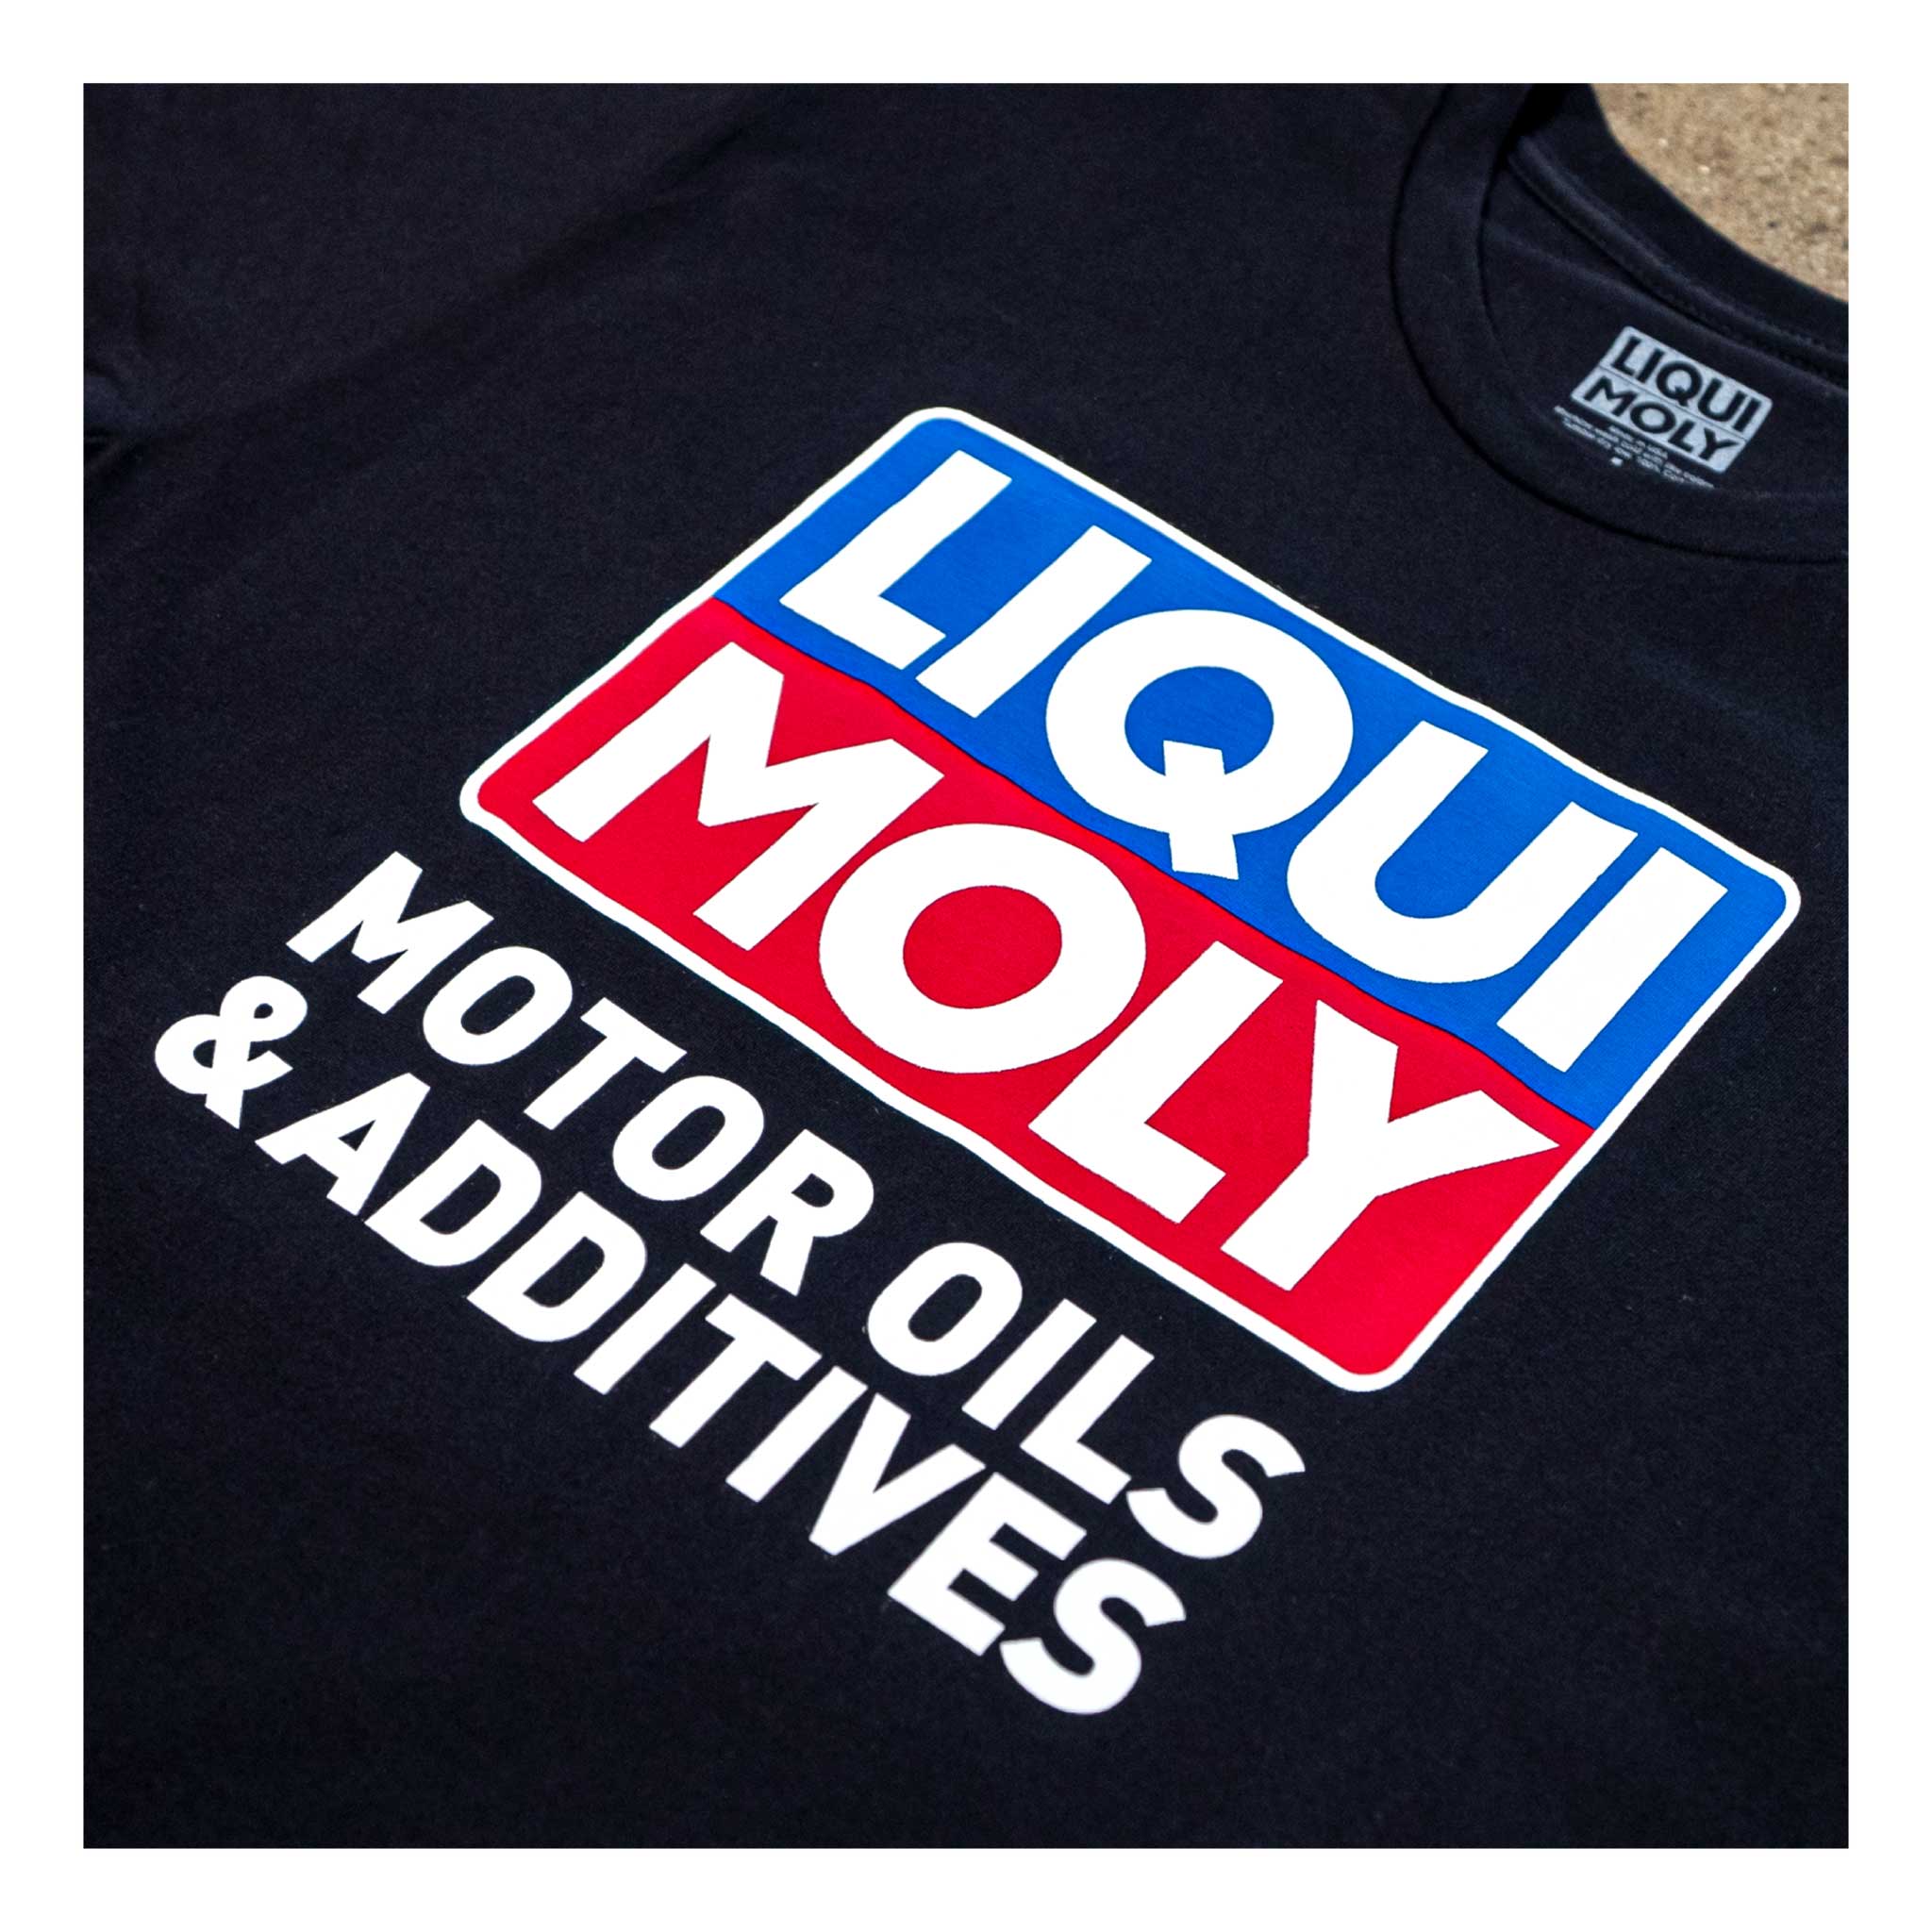 LIQUI MOLY 20004 Hydraulic Lifter Additive – Parts Universe